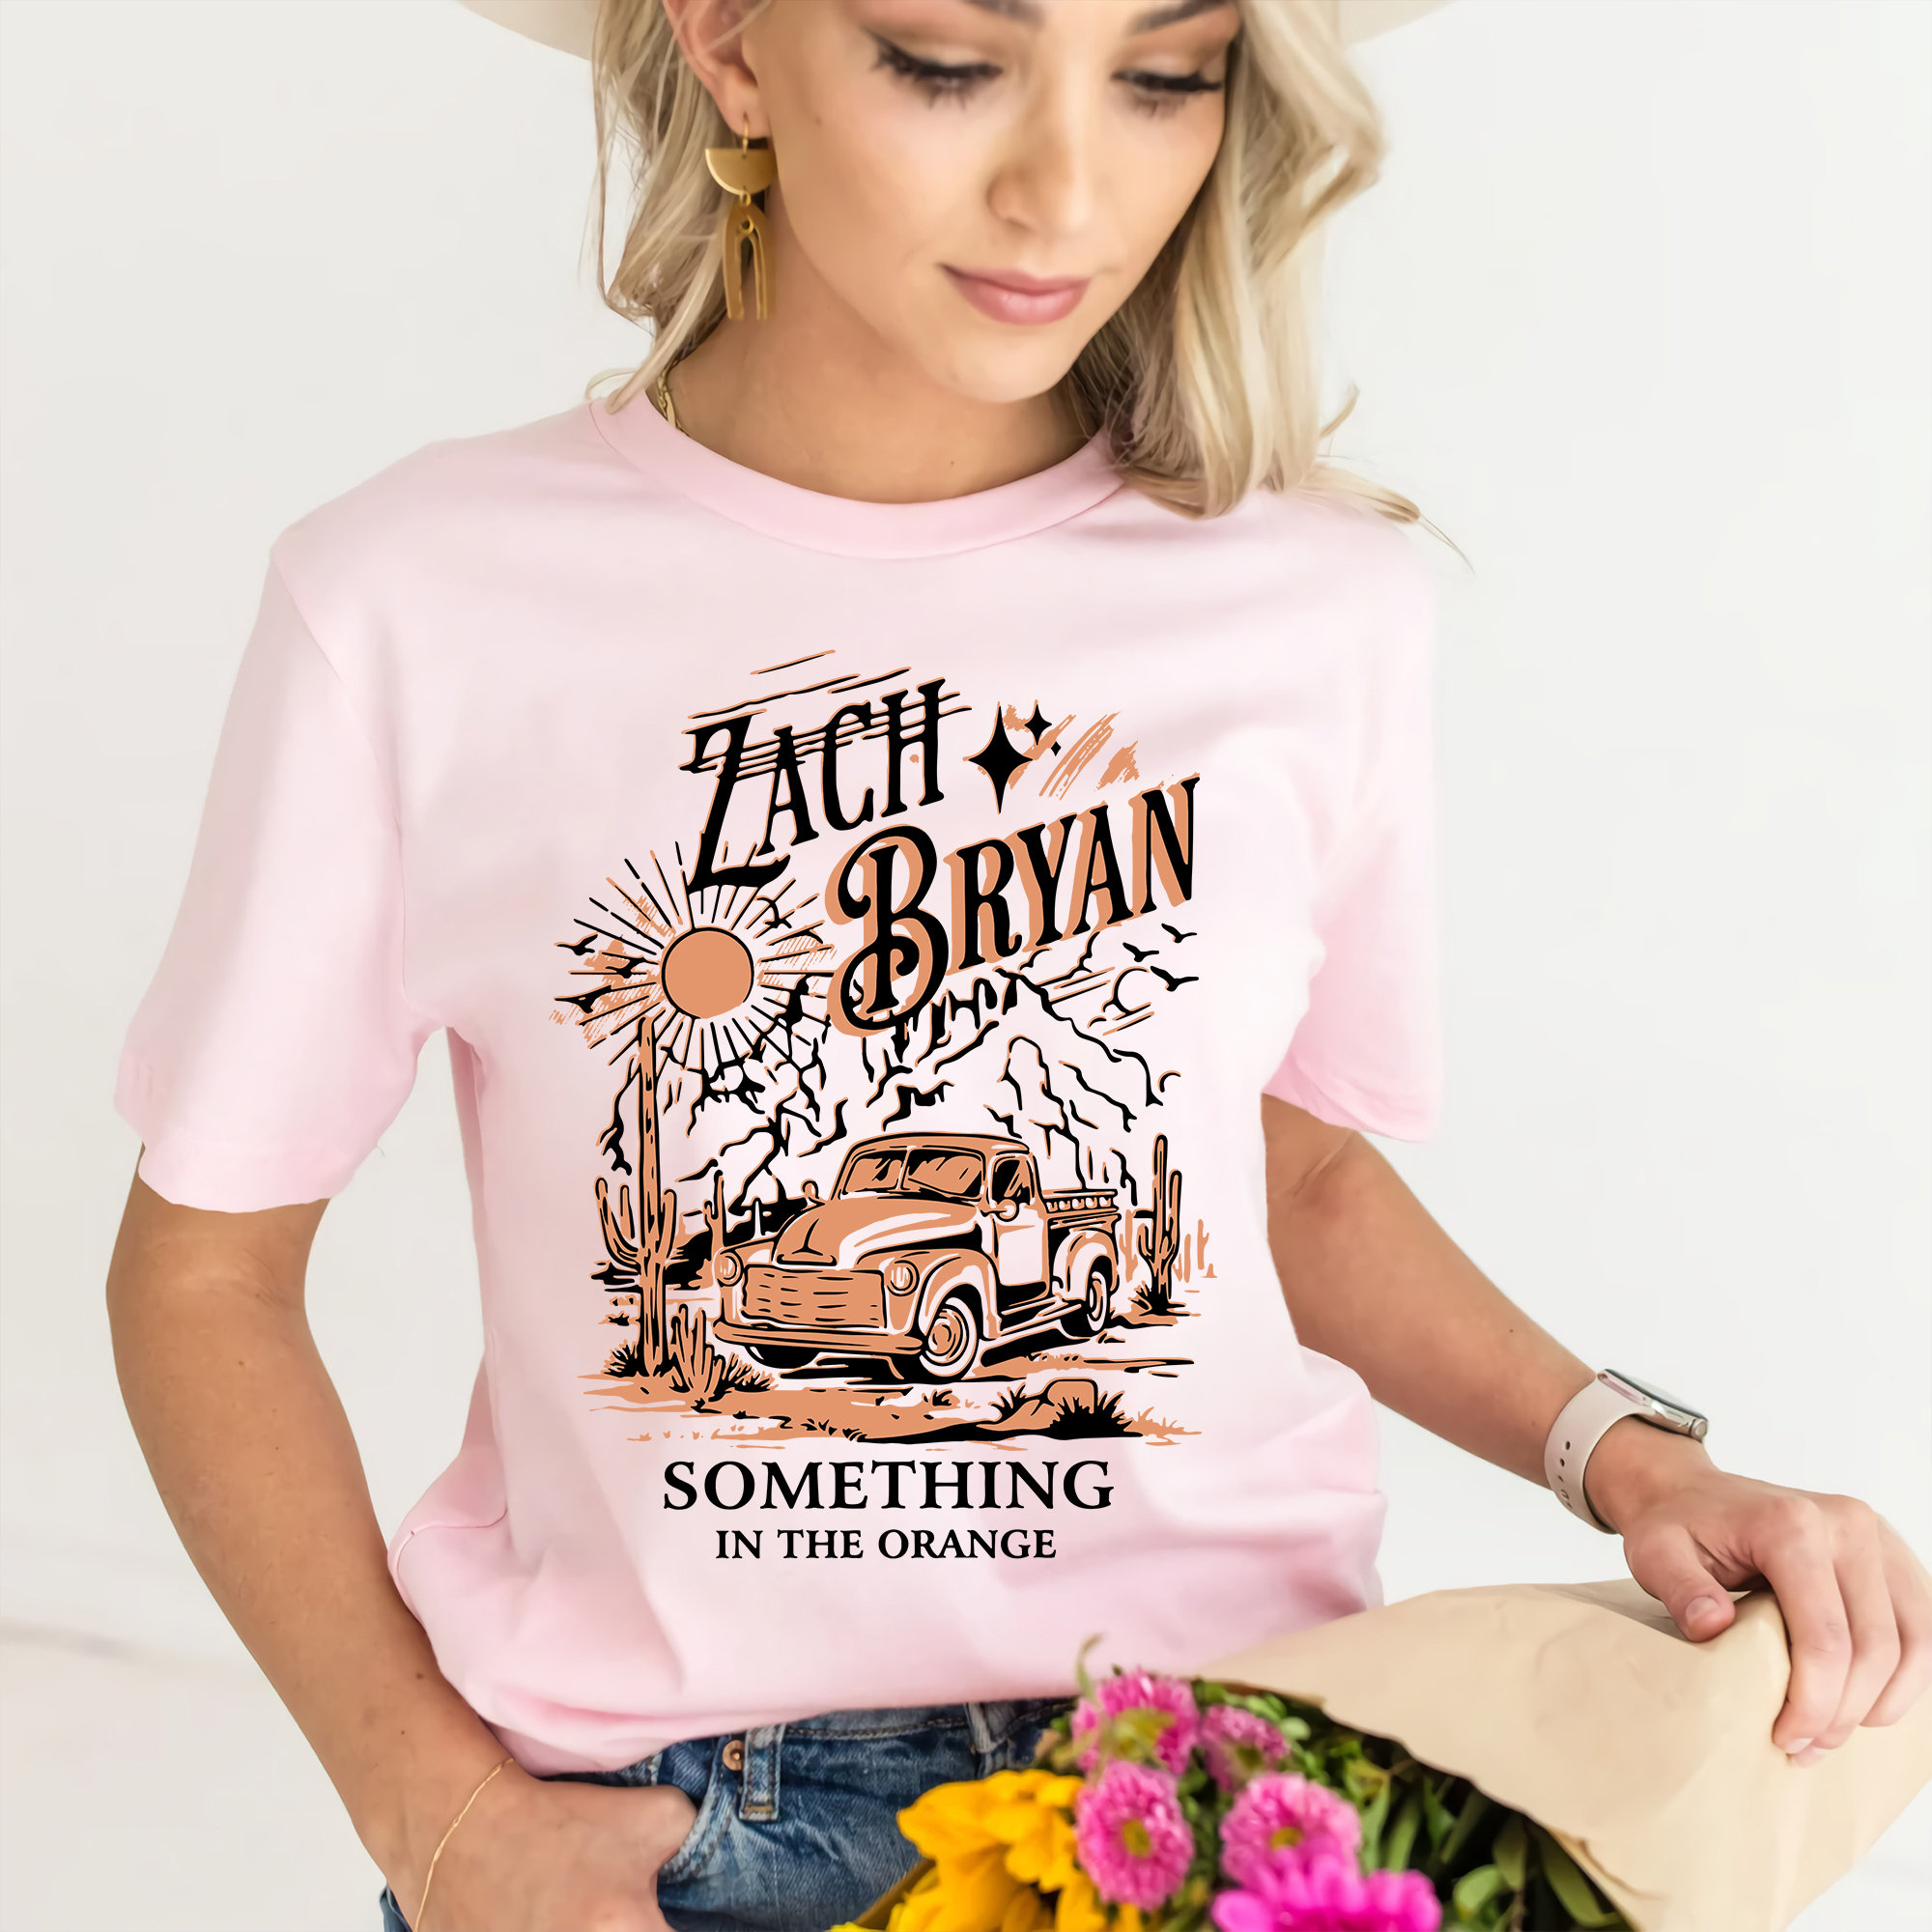 zach bryan orange shirt music country singer shirt heartbreak zach clothing 3257 3fvck